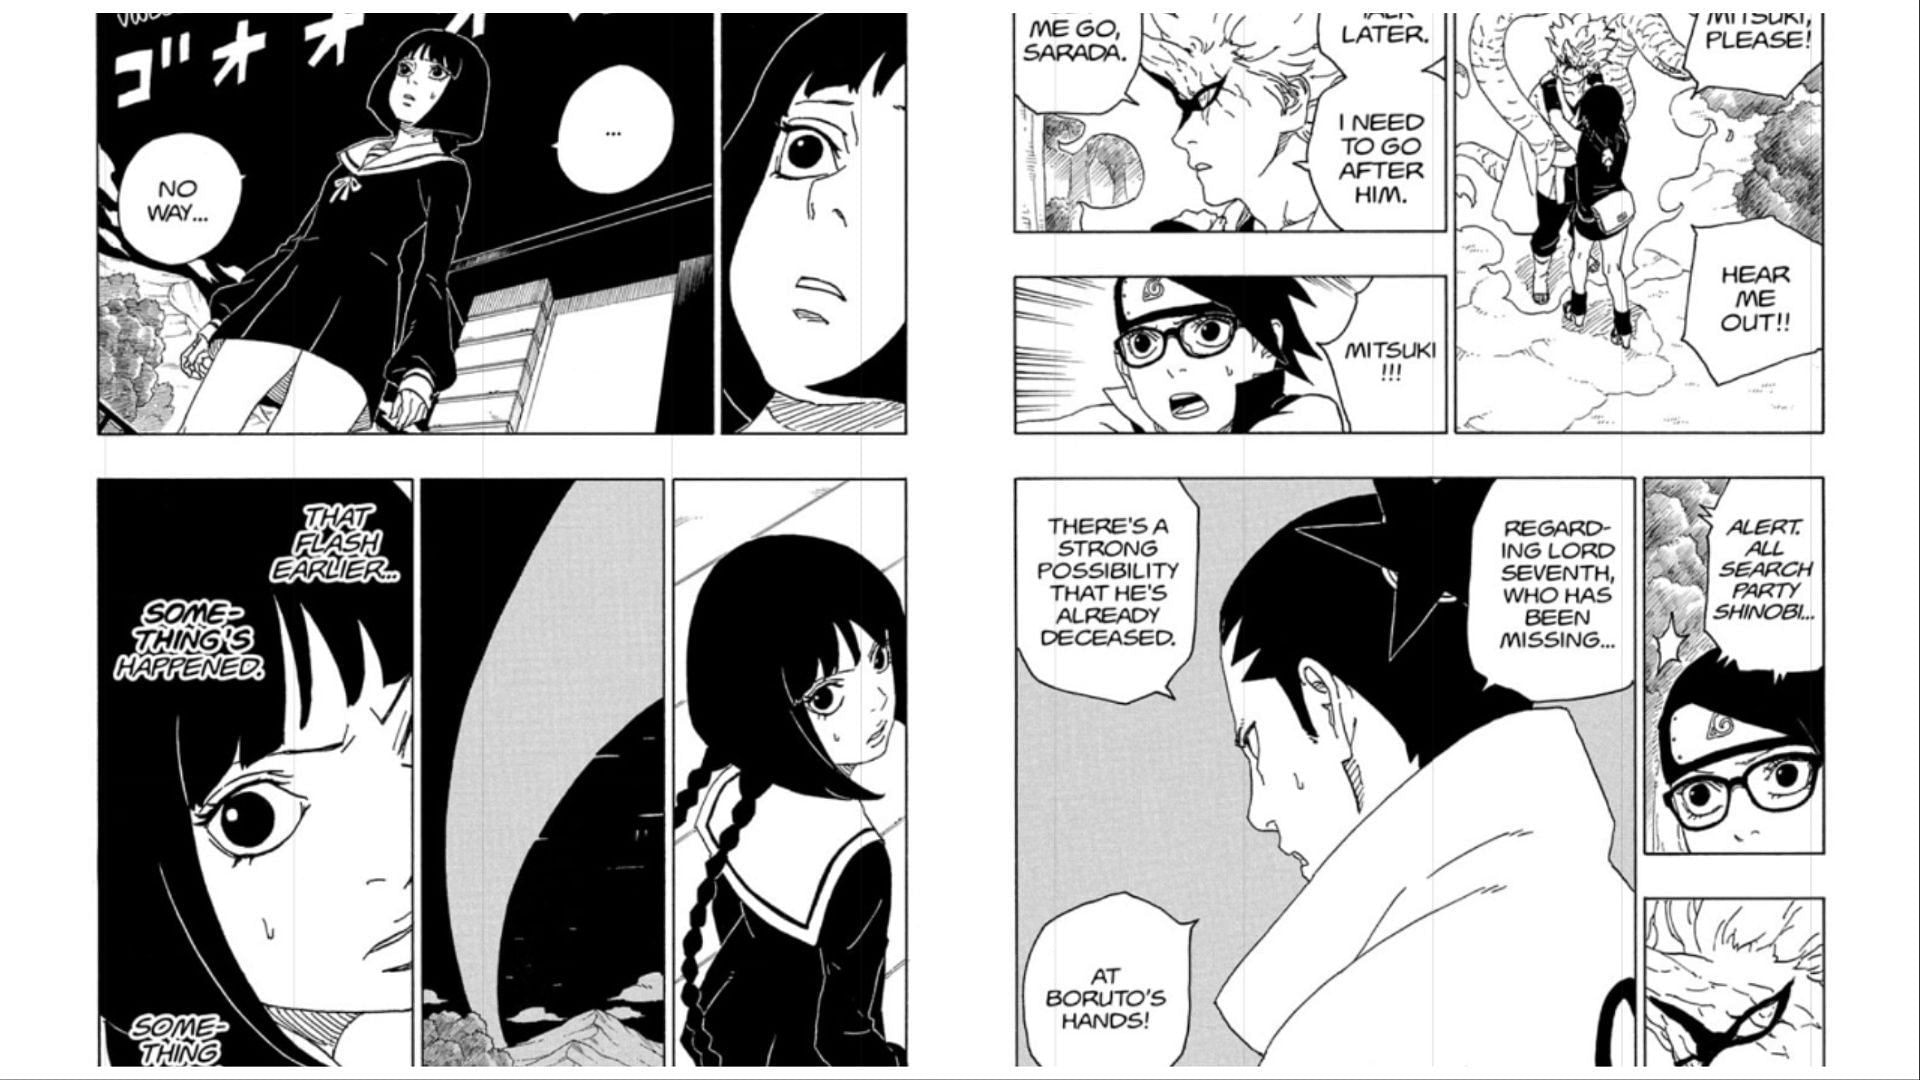 Love how Hinata and Himawari are supportive of Boruto and Naruto. : r/Boruto